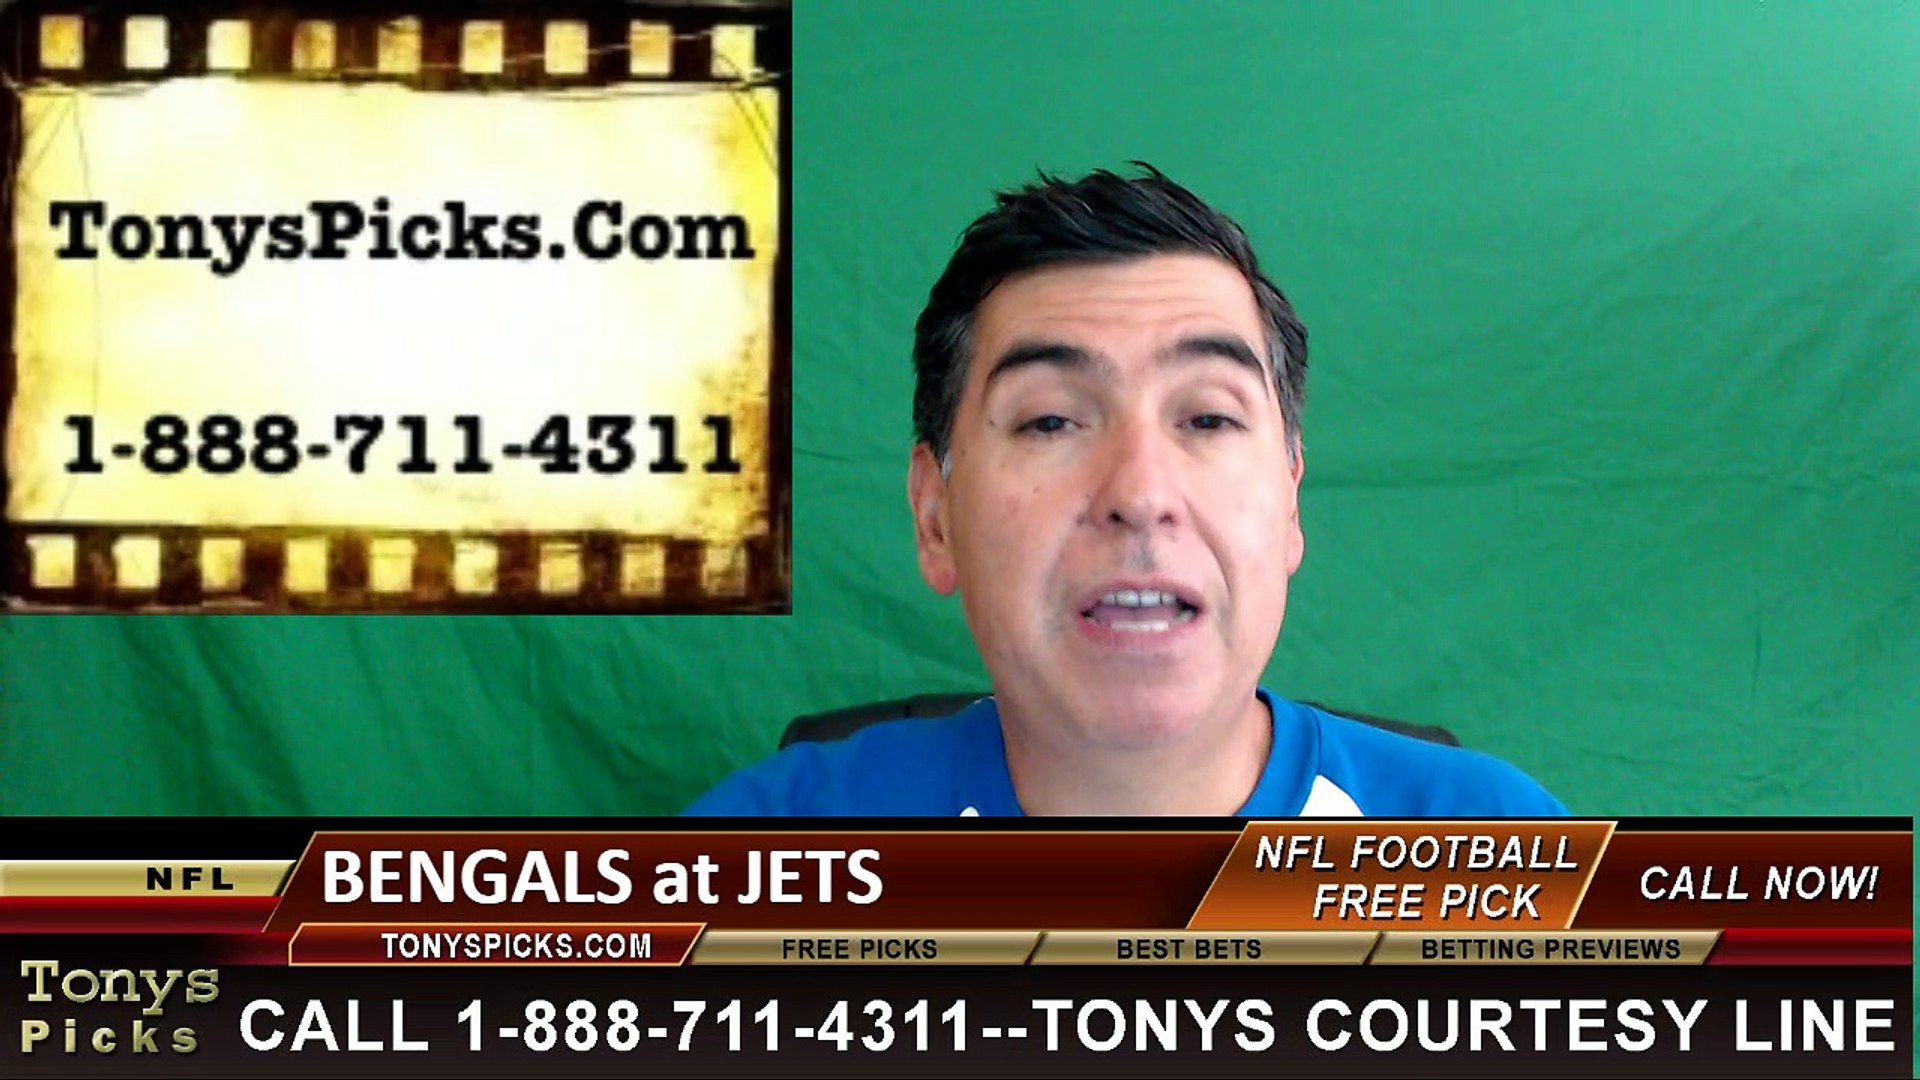 New York Jets vs. Cincinnati Bengals Free Pick Prediction NFL Pro